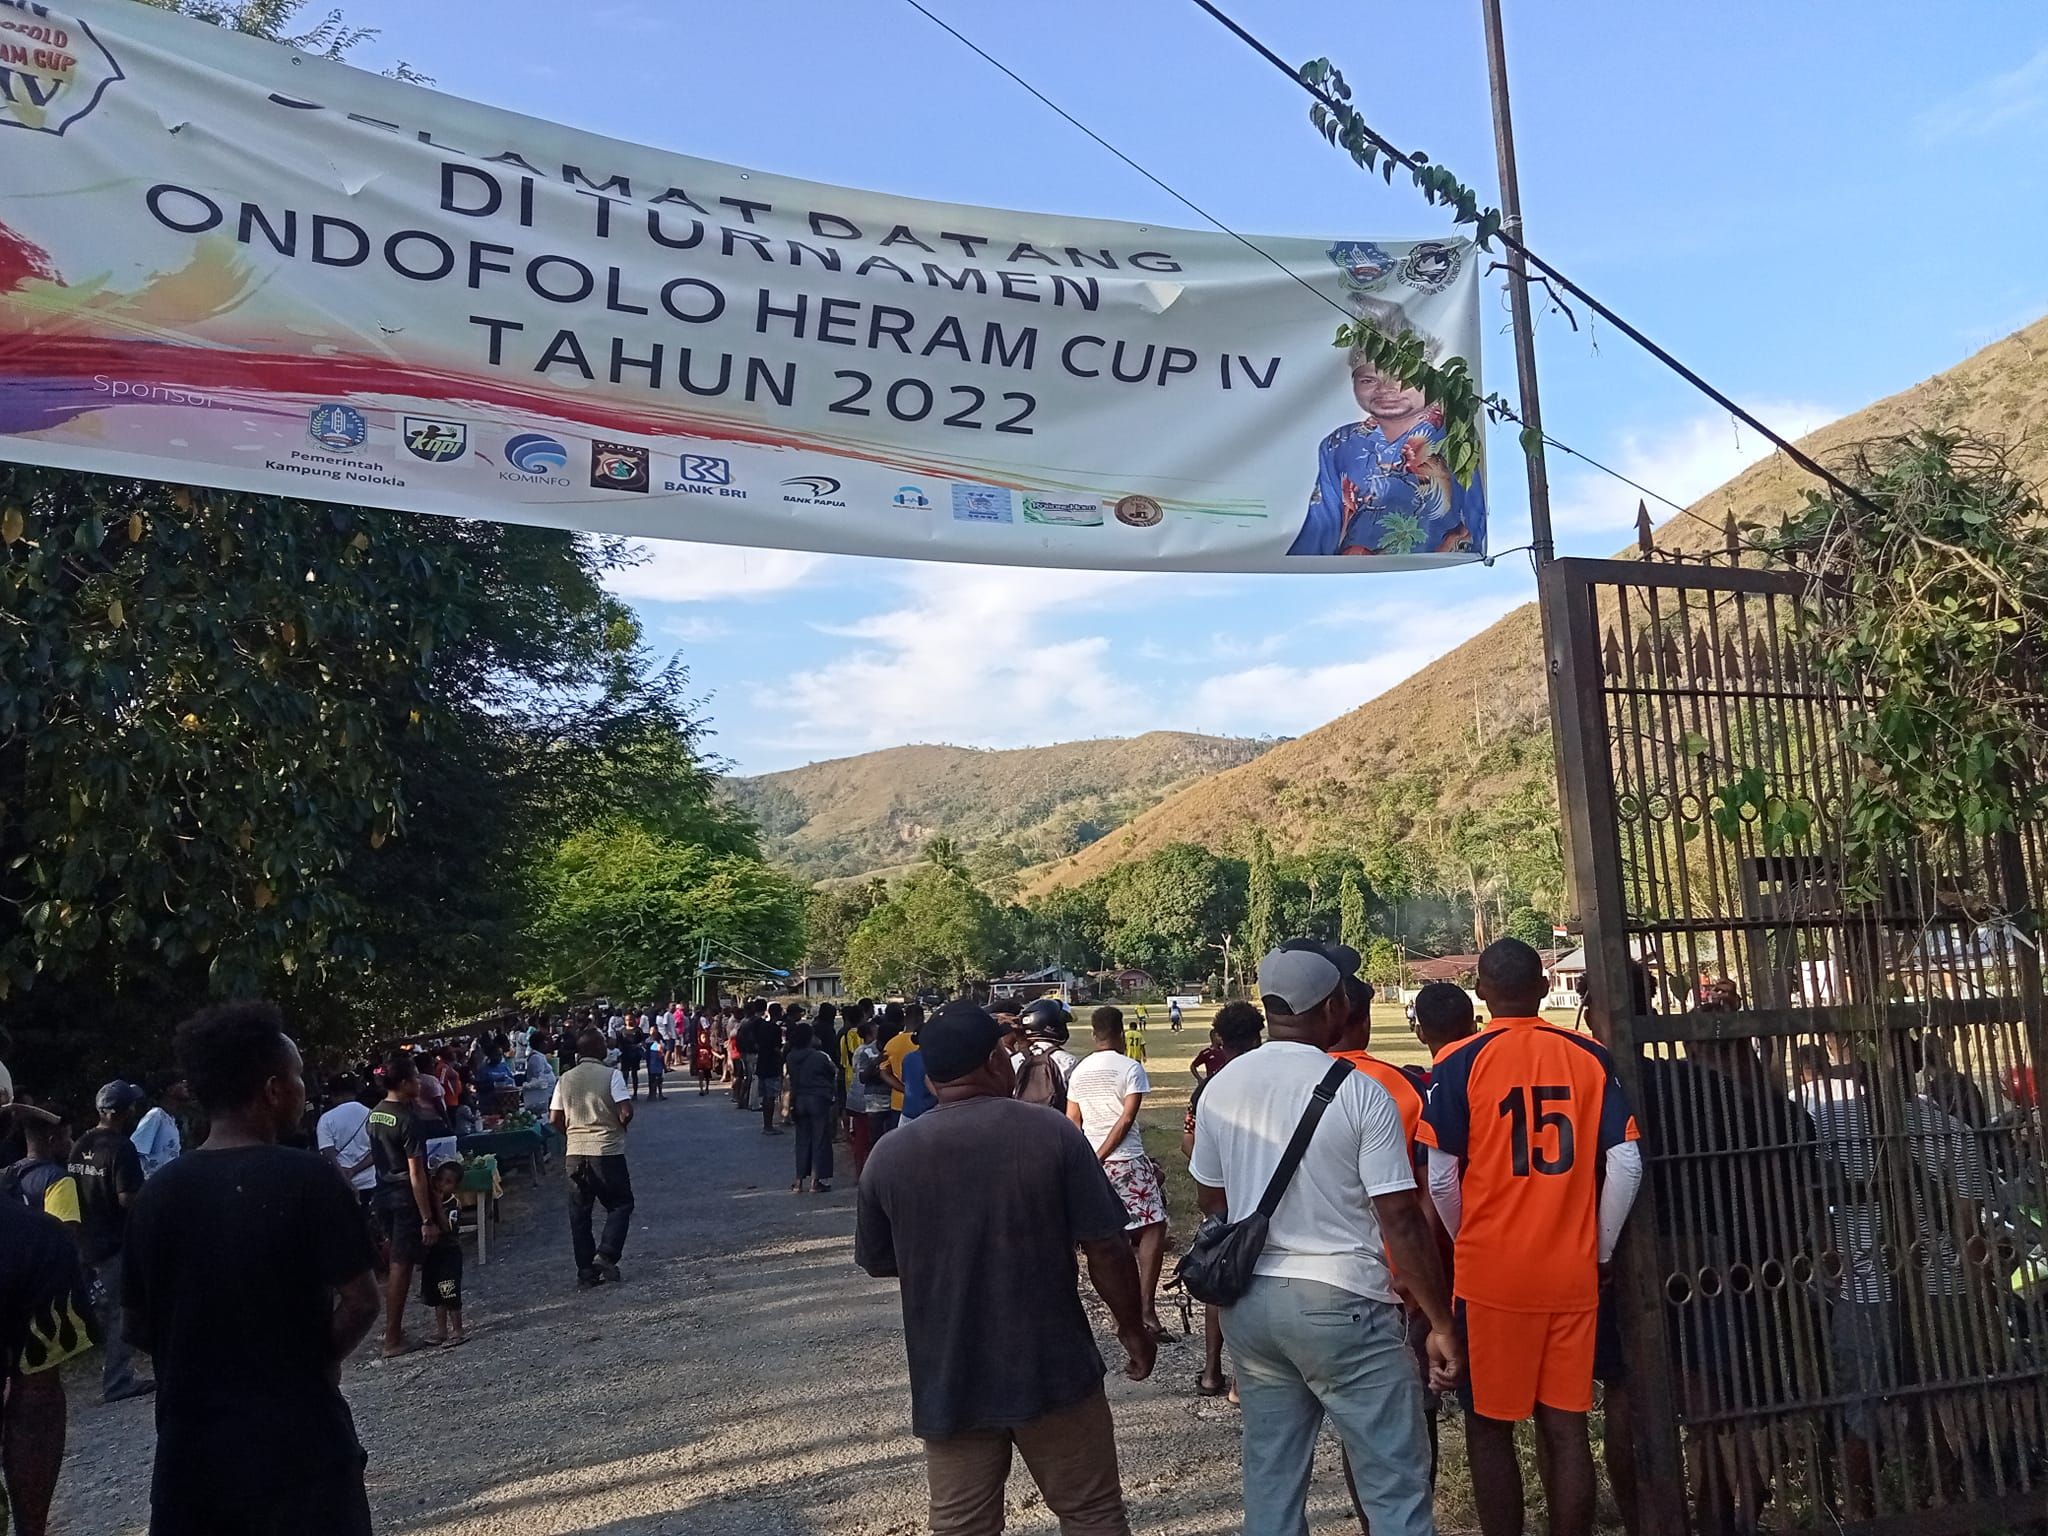  antusias warga saat menyaksikan Turnamen Ondofolo Heram Cup IV 2022, bersama  tim kebanggaan mereka bermain di Lapangan Sepakbola Peternakan Kampung Harapan, Kabupaten Jayapura, Provinsi Papua, Indonesia.